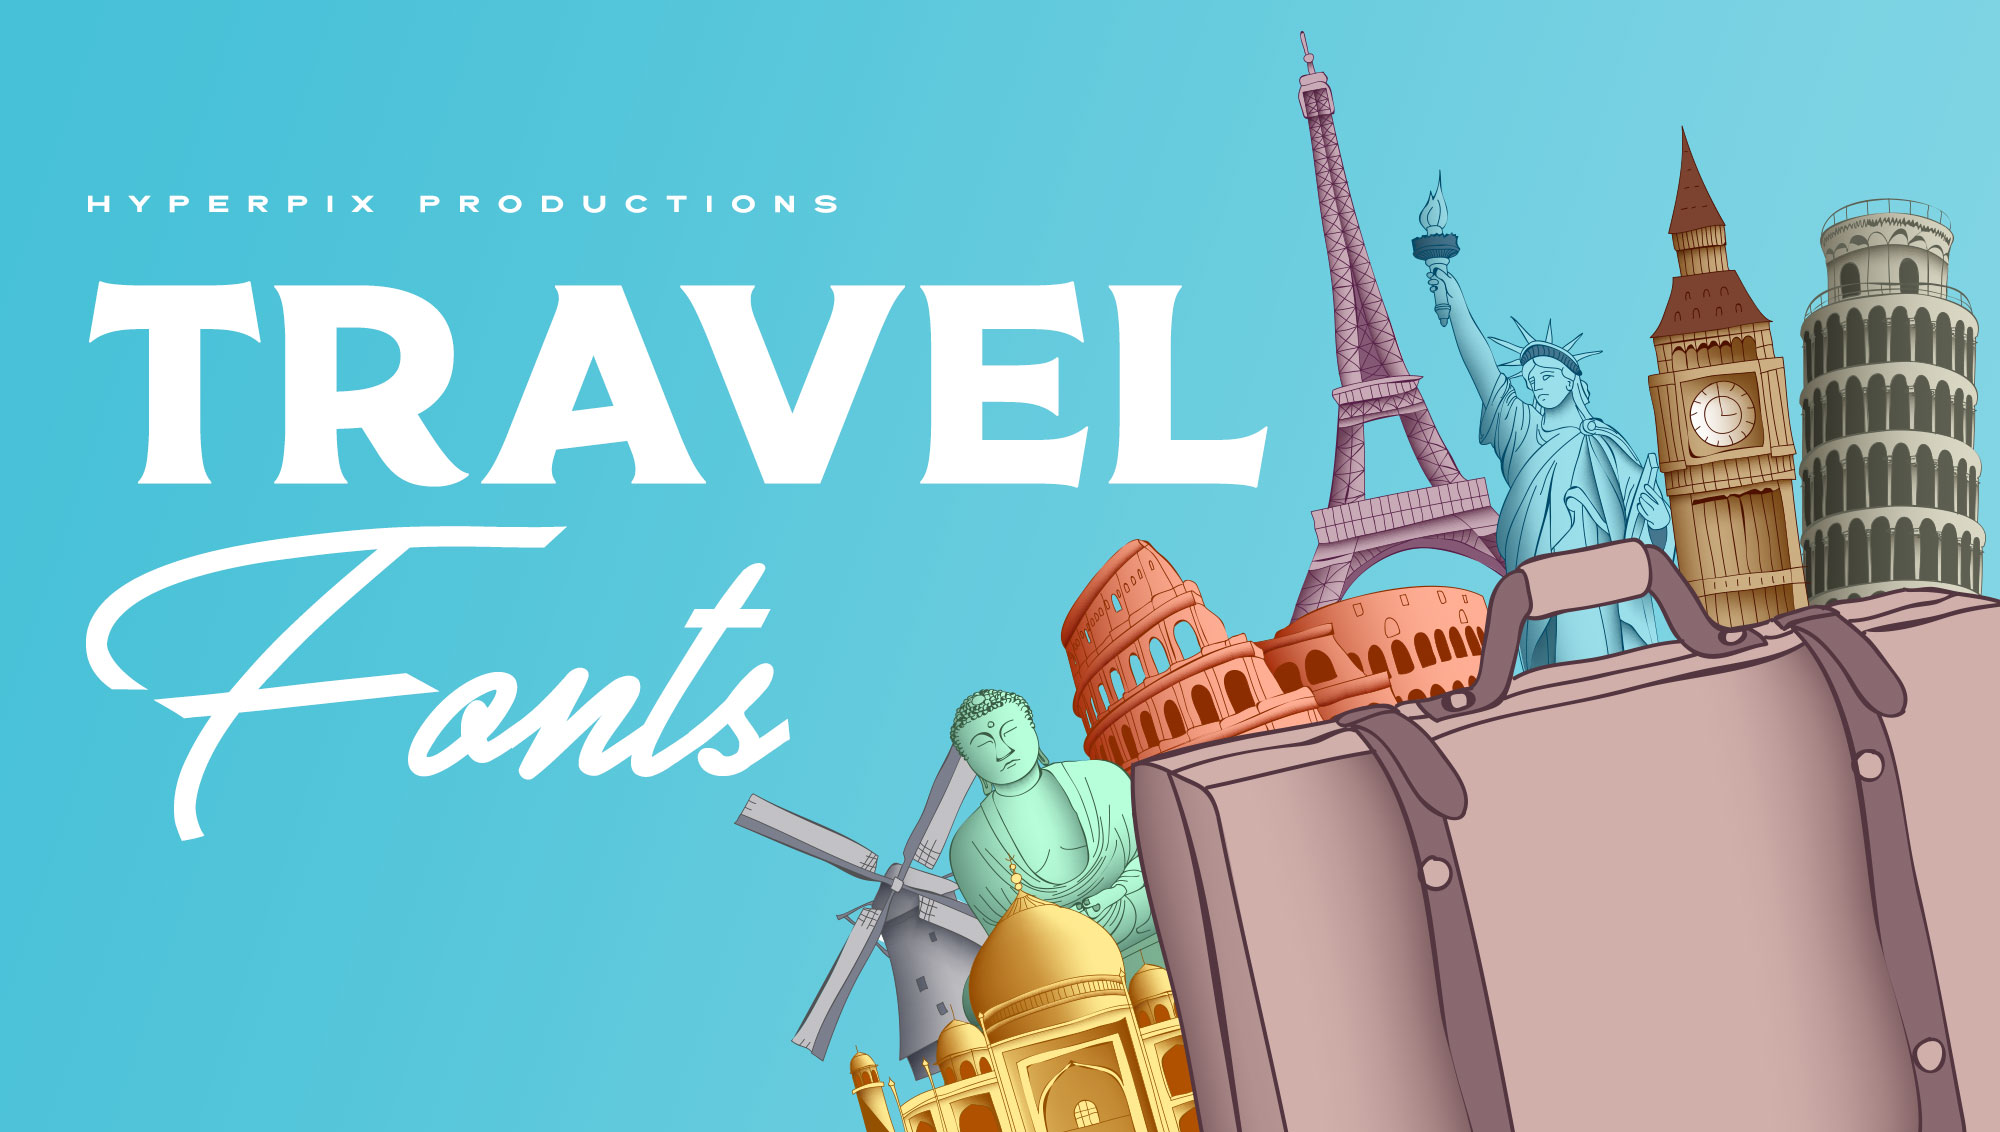 tourism fonts download